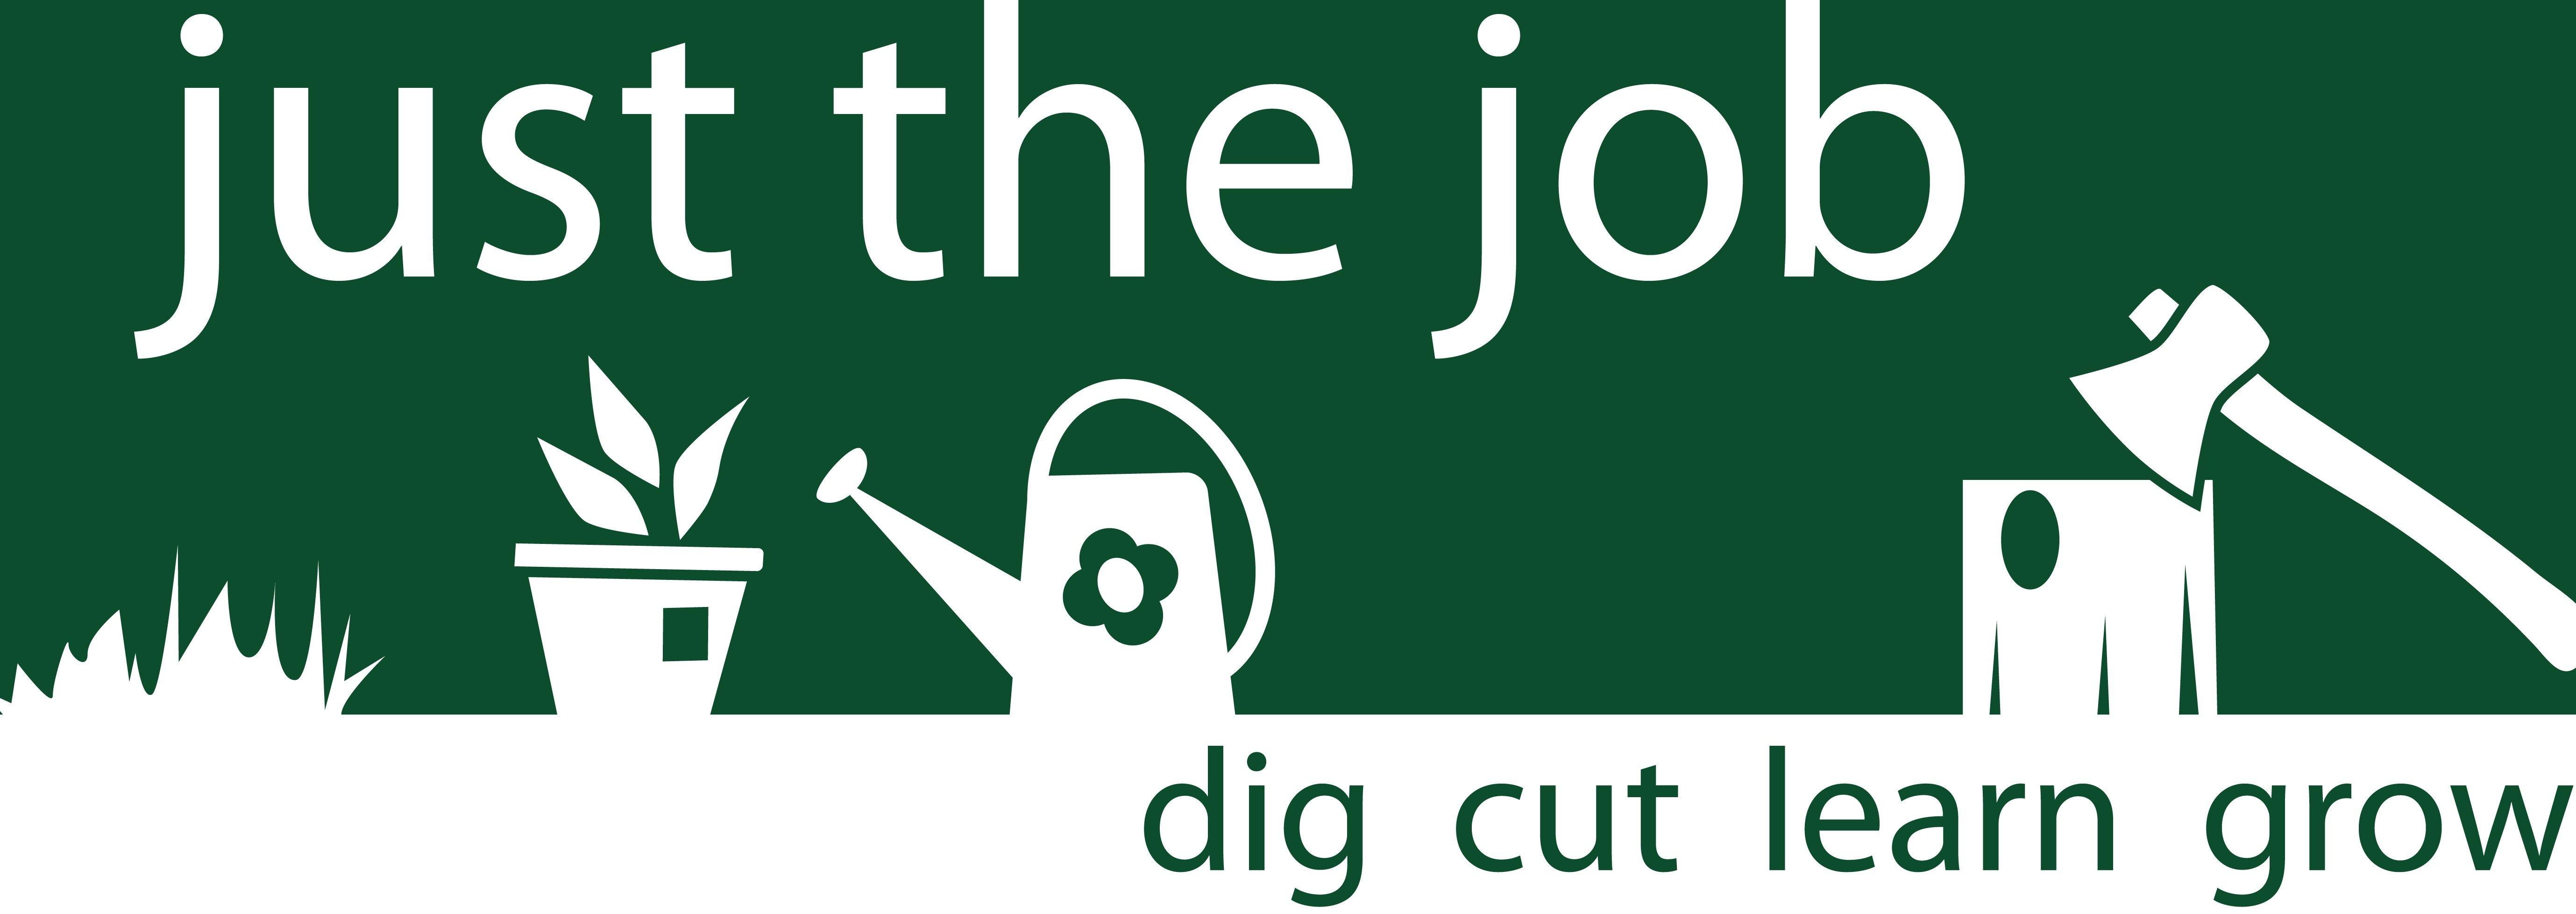 Green Job Logo - Just the Job Environmental Enterprise Ltd